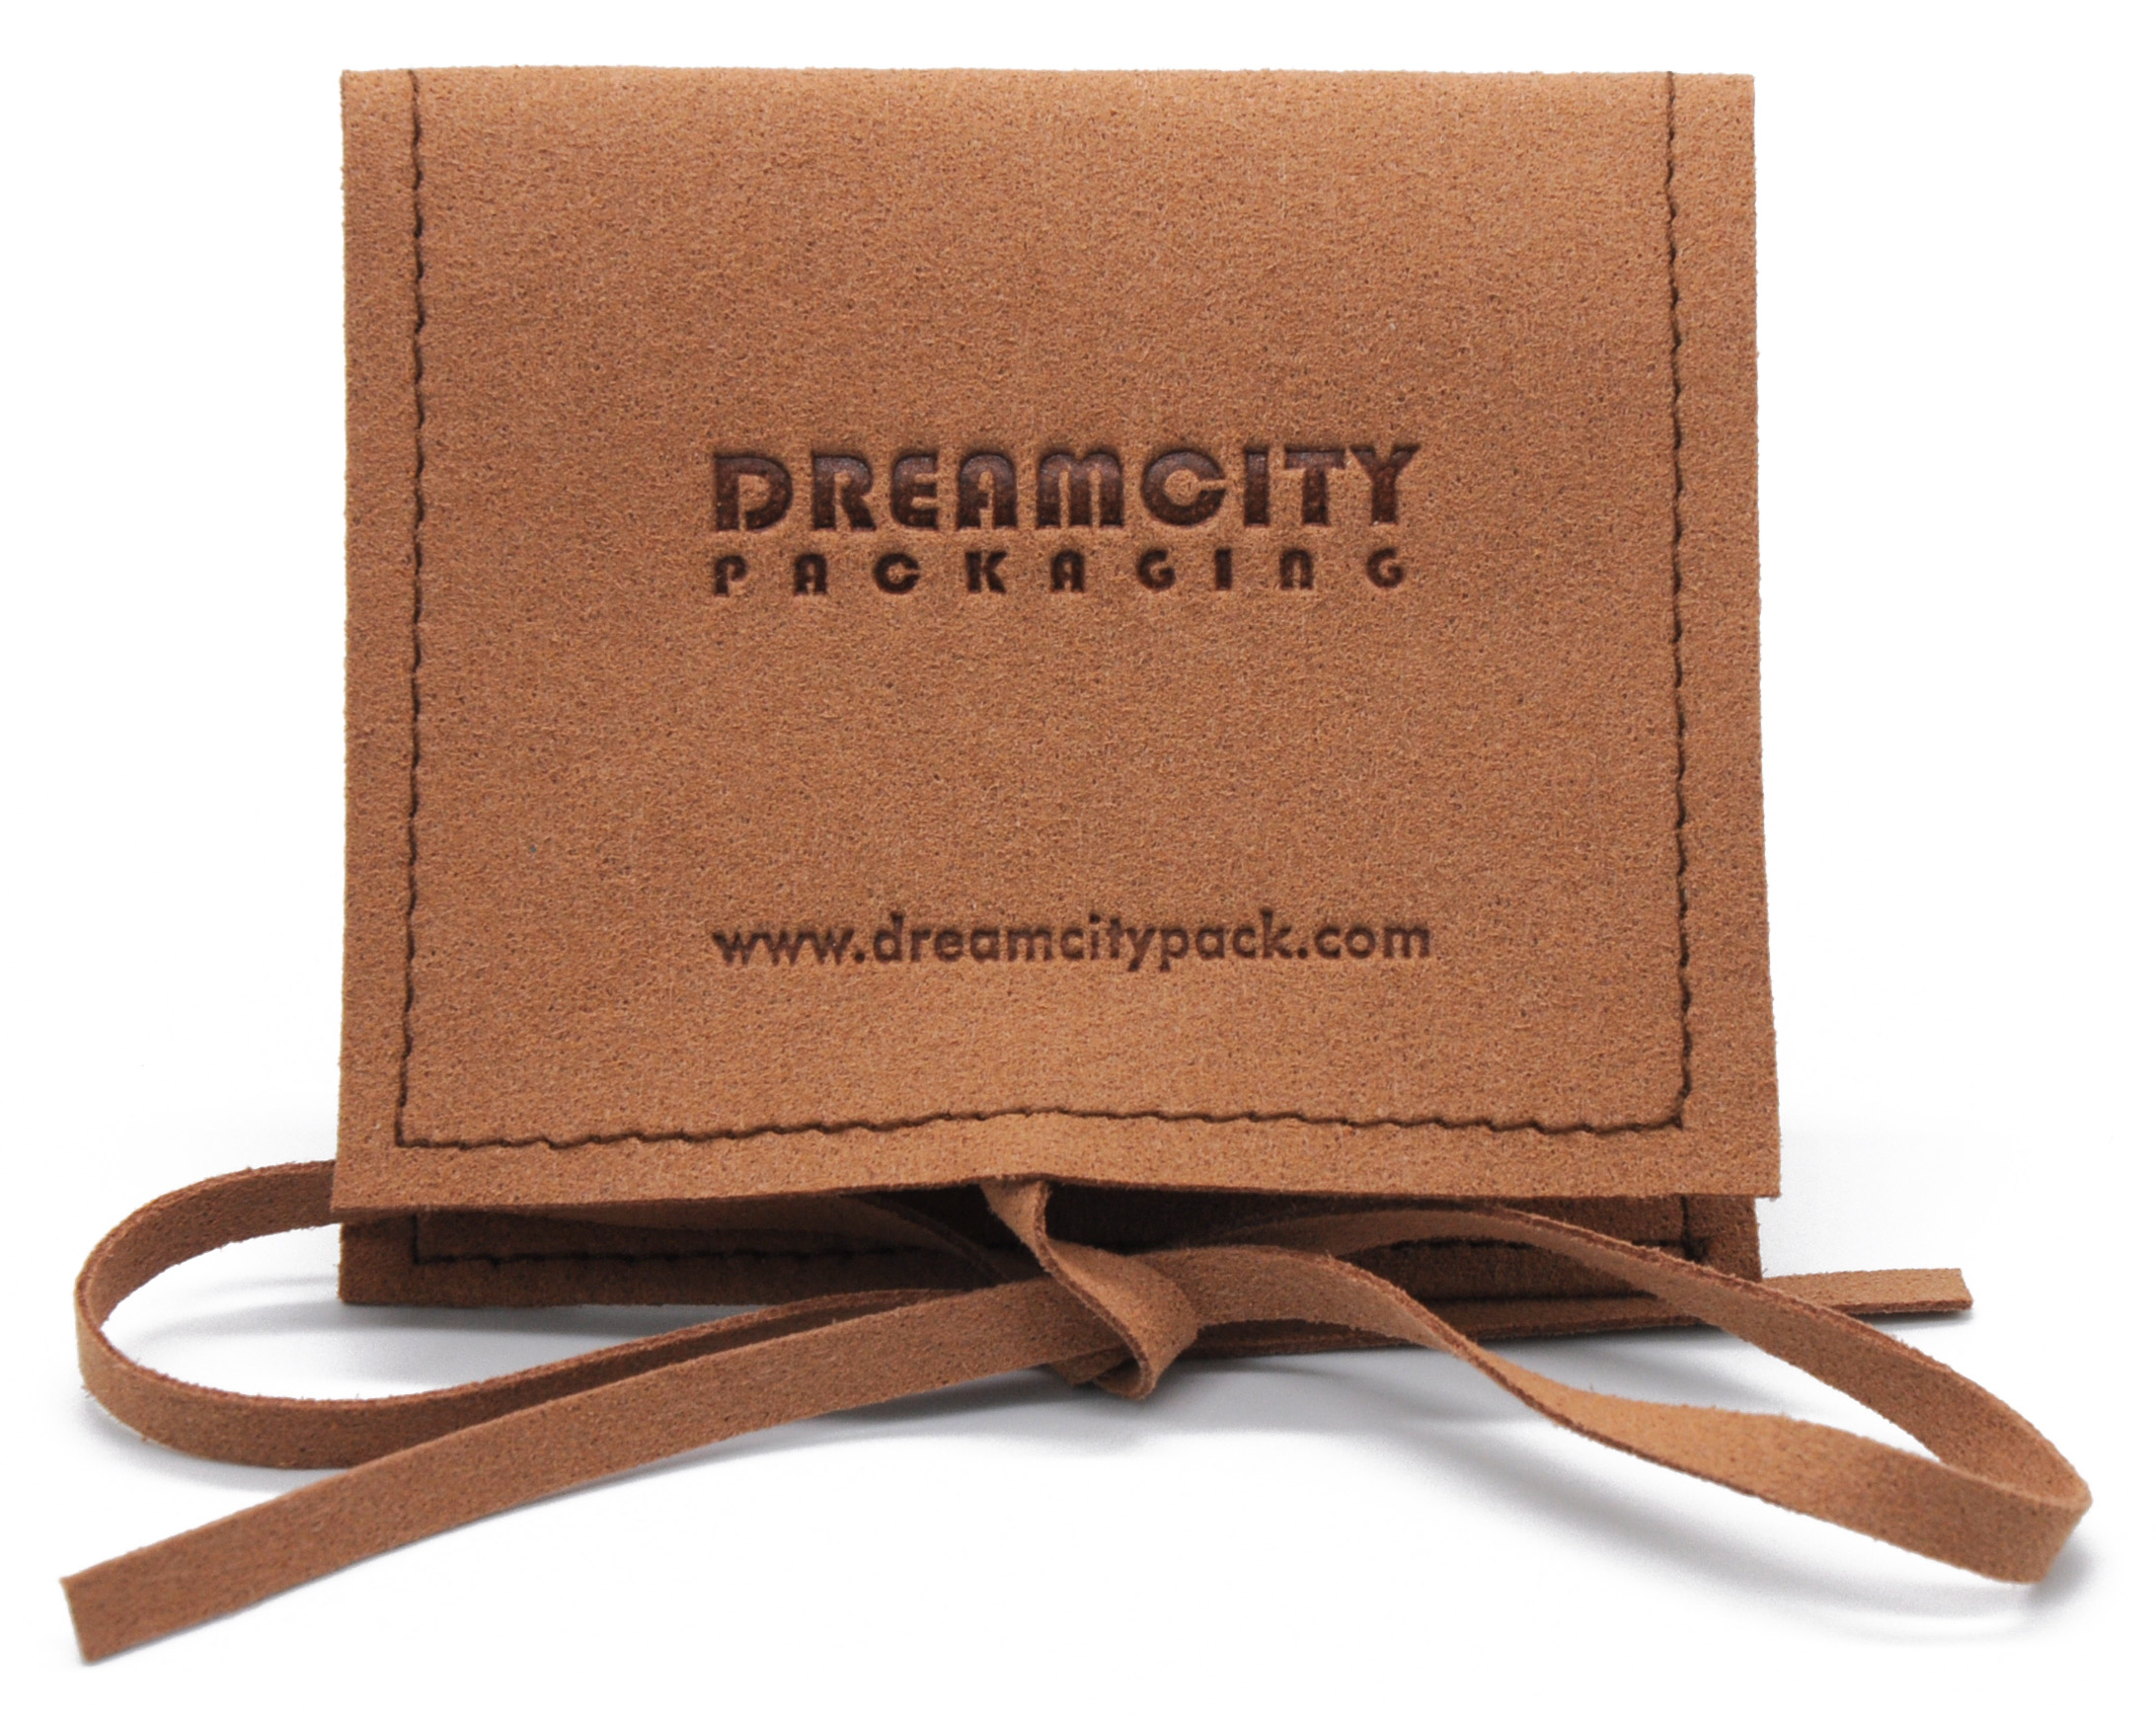 Personalized Leather Envelope Purse Handbag